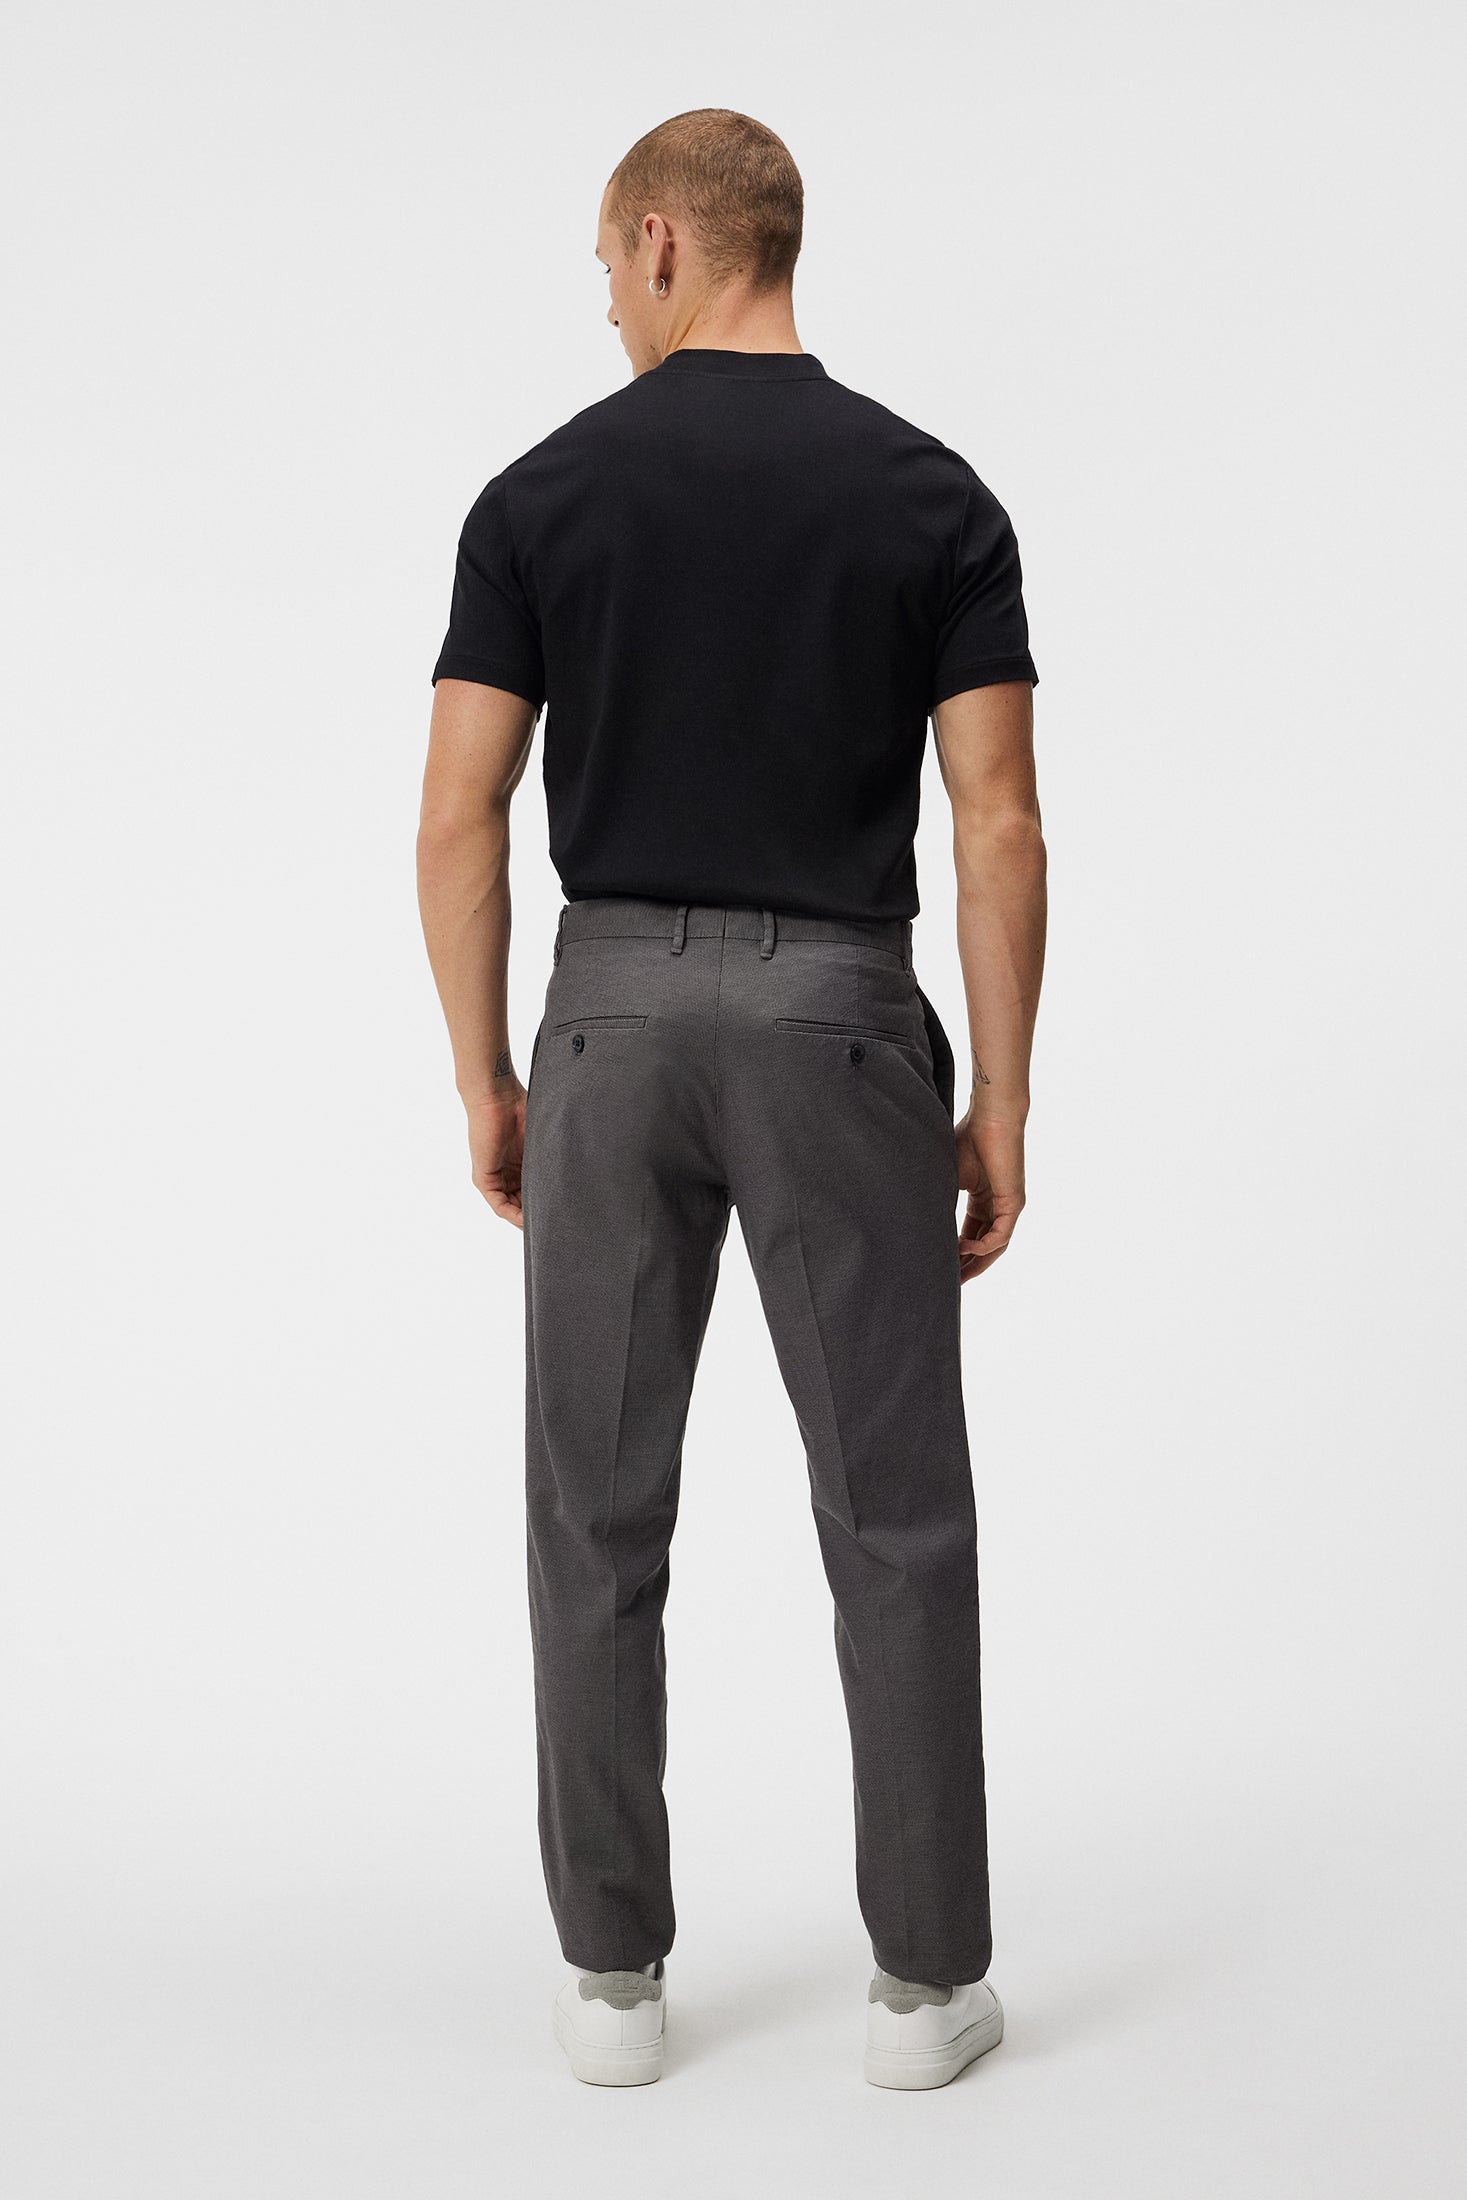 Buy Arrow Grey Regular Fit Texture Trousers for Mens Online @ Tata CLiQ